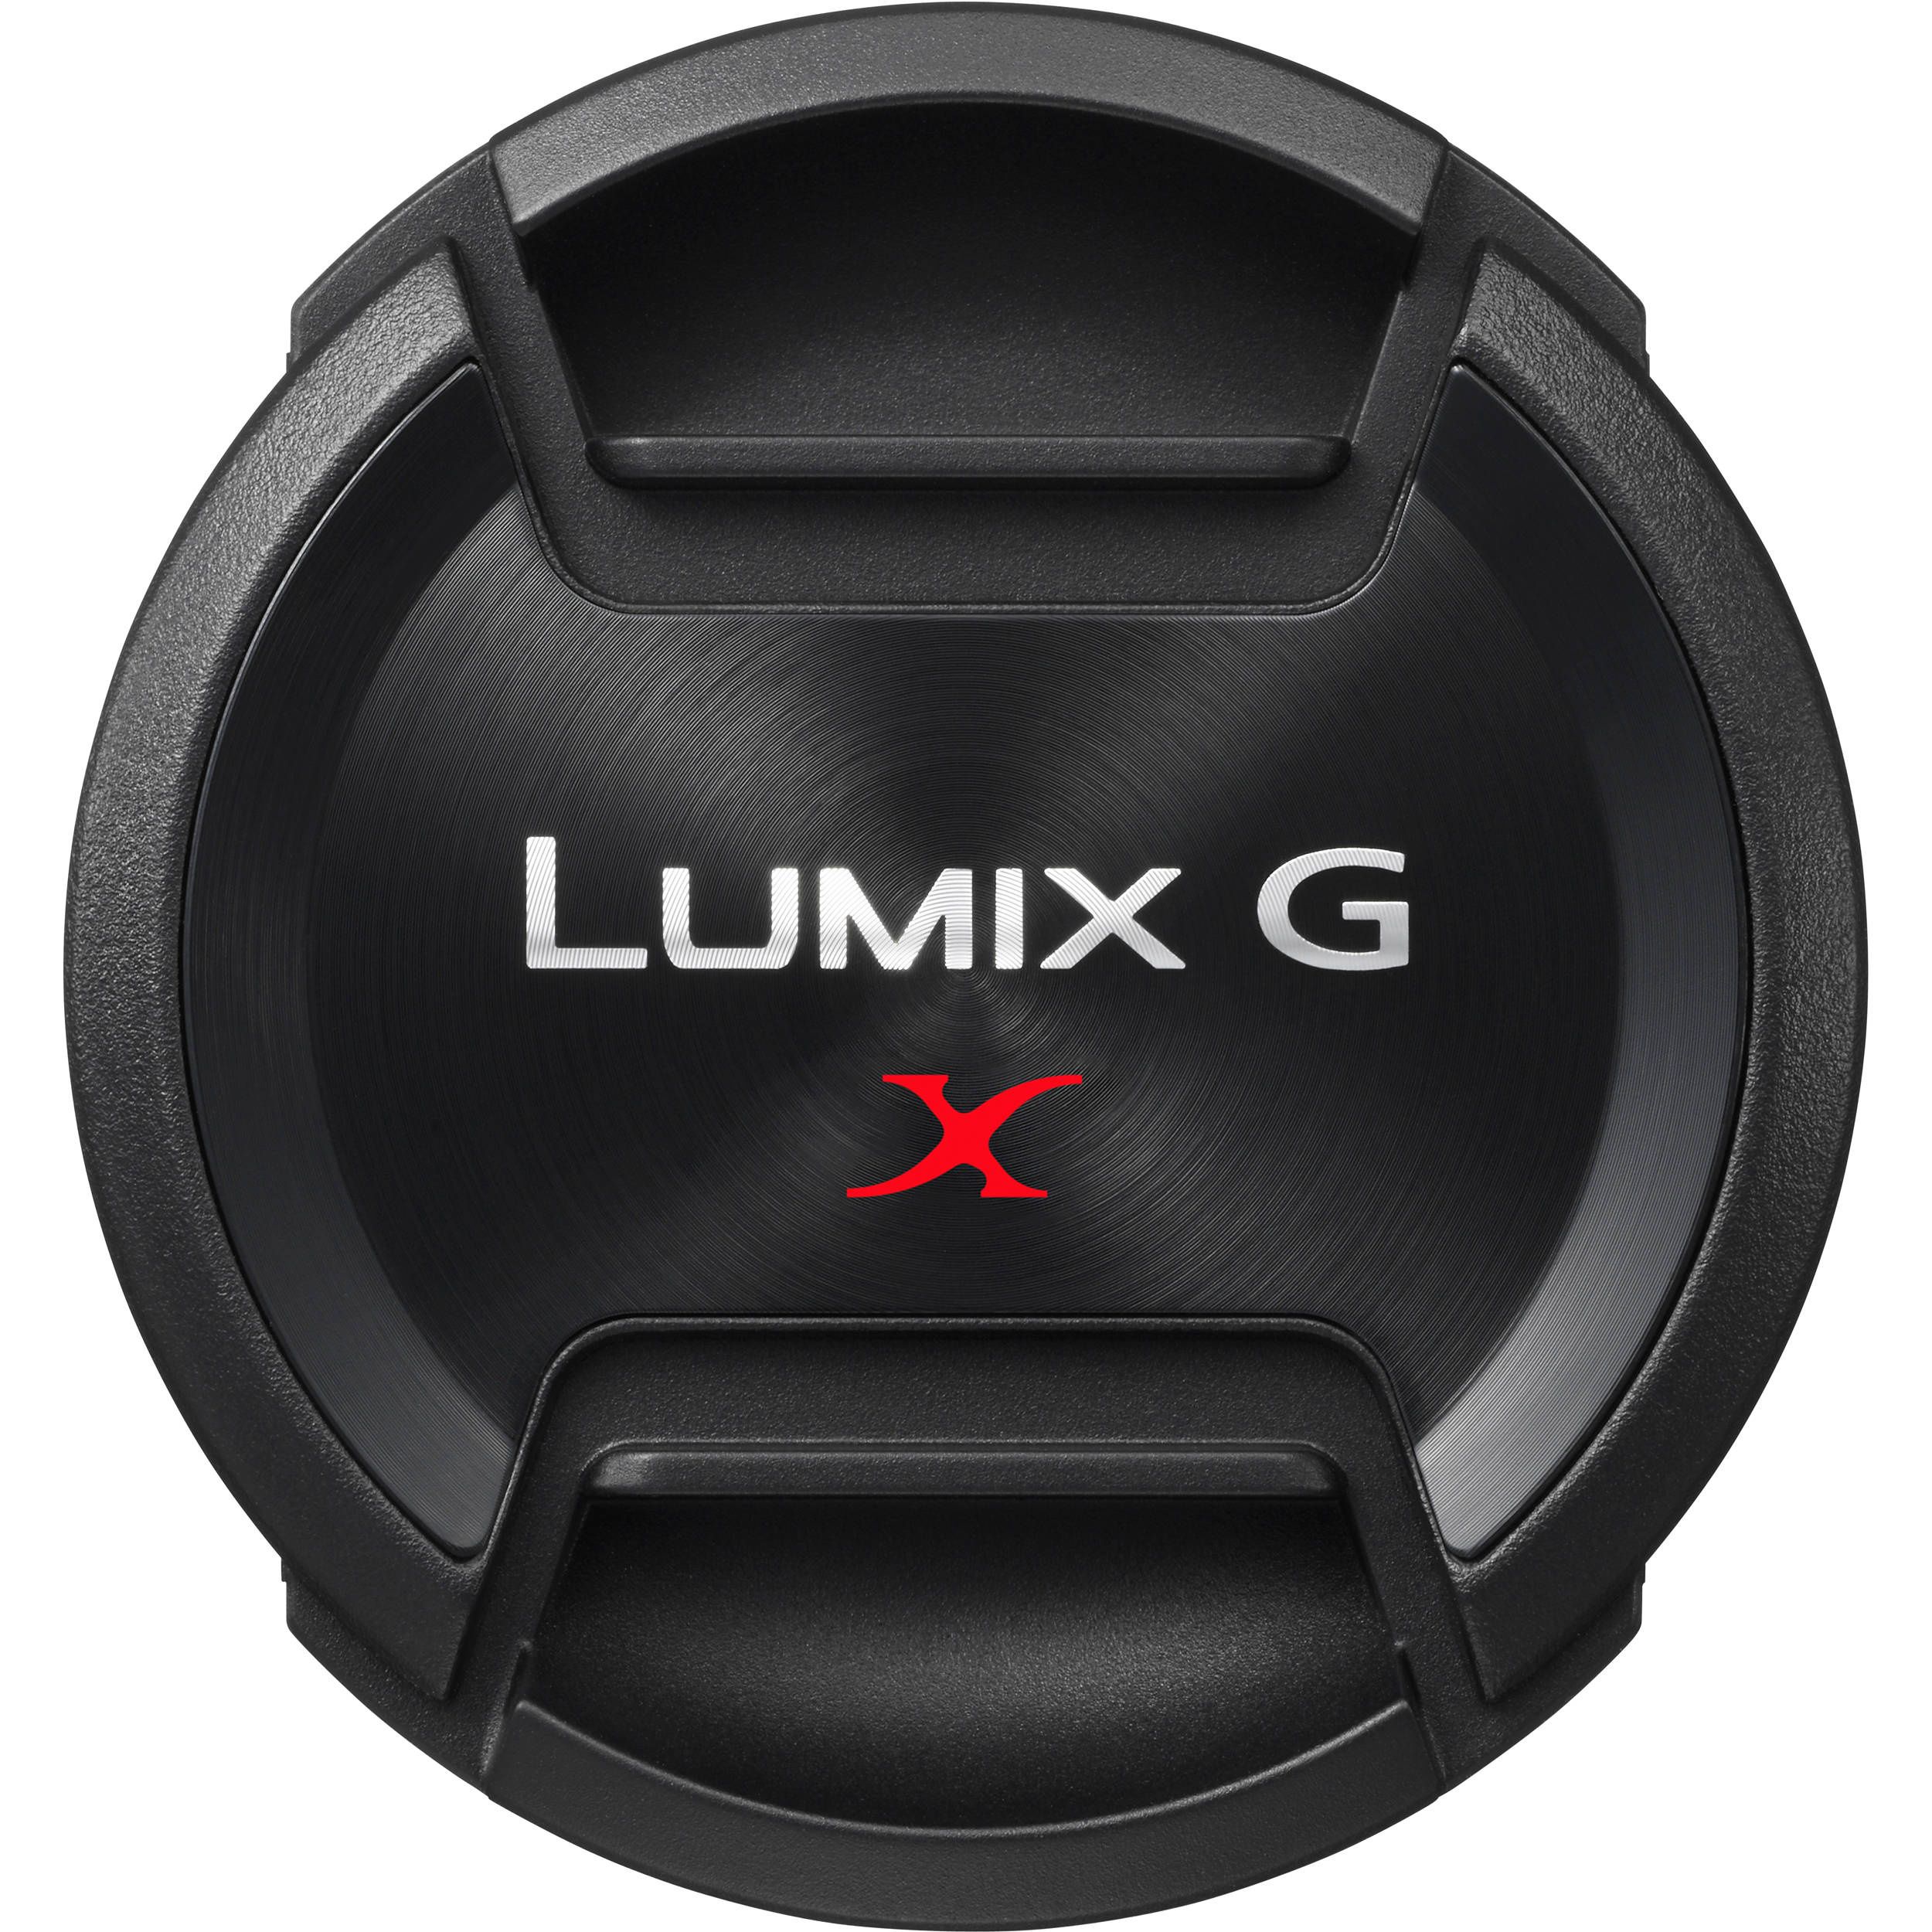 Panasonic 58mm Lens Cap for LUMIX G X VARIO 12-35mm f/2.8